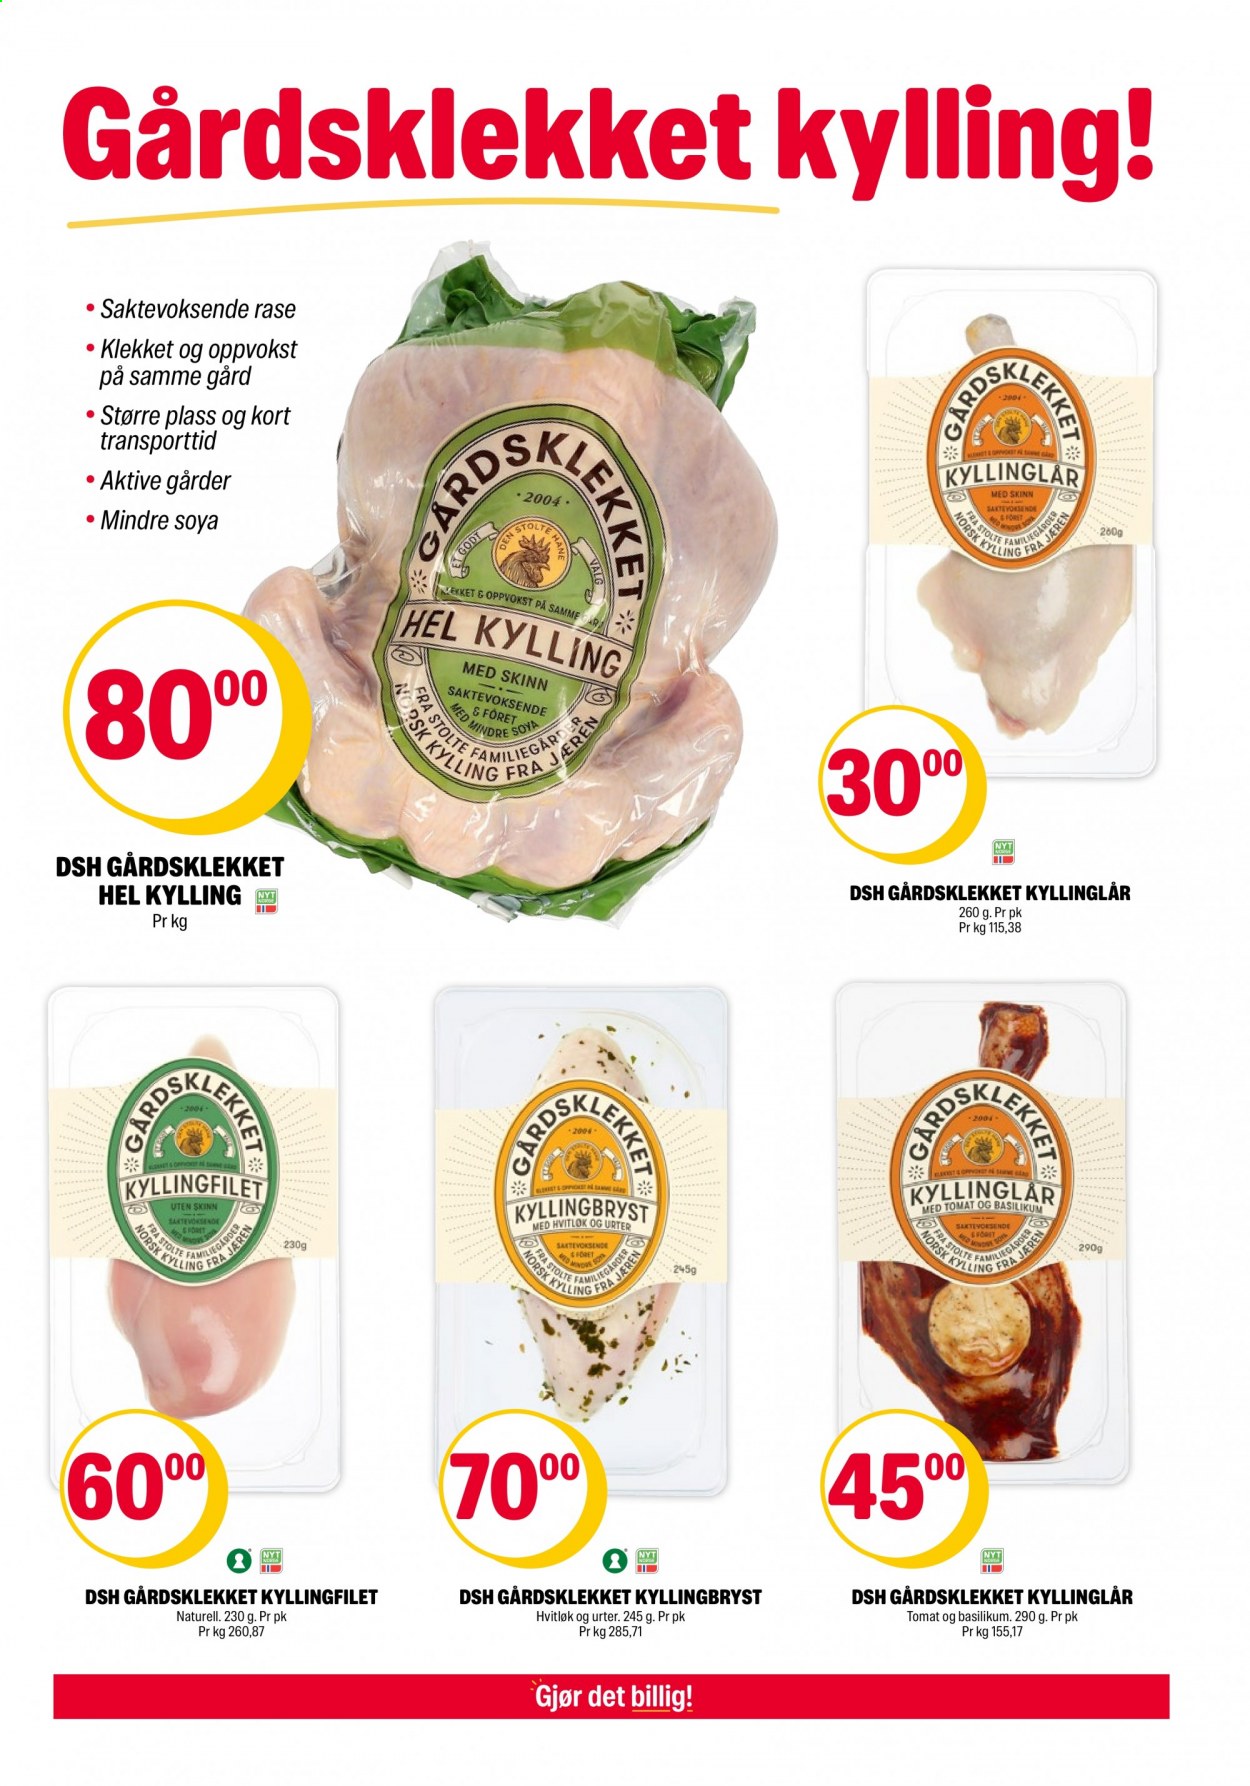 thumbnail - Kundeavis Coop Extra - 15.3.2021 - 21.3.2021 - Produkter fra tilbudsaviser - hel kylling, kyllingbryst, kyllingfilet, kyllinglår, kyllingkjøtt, soya. Side 3.